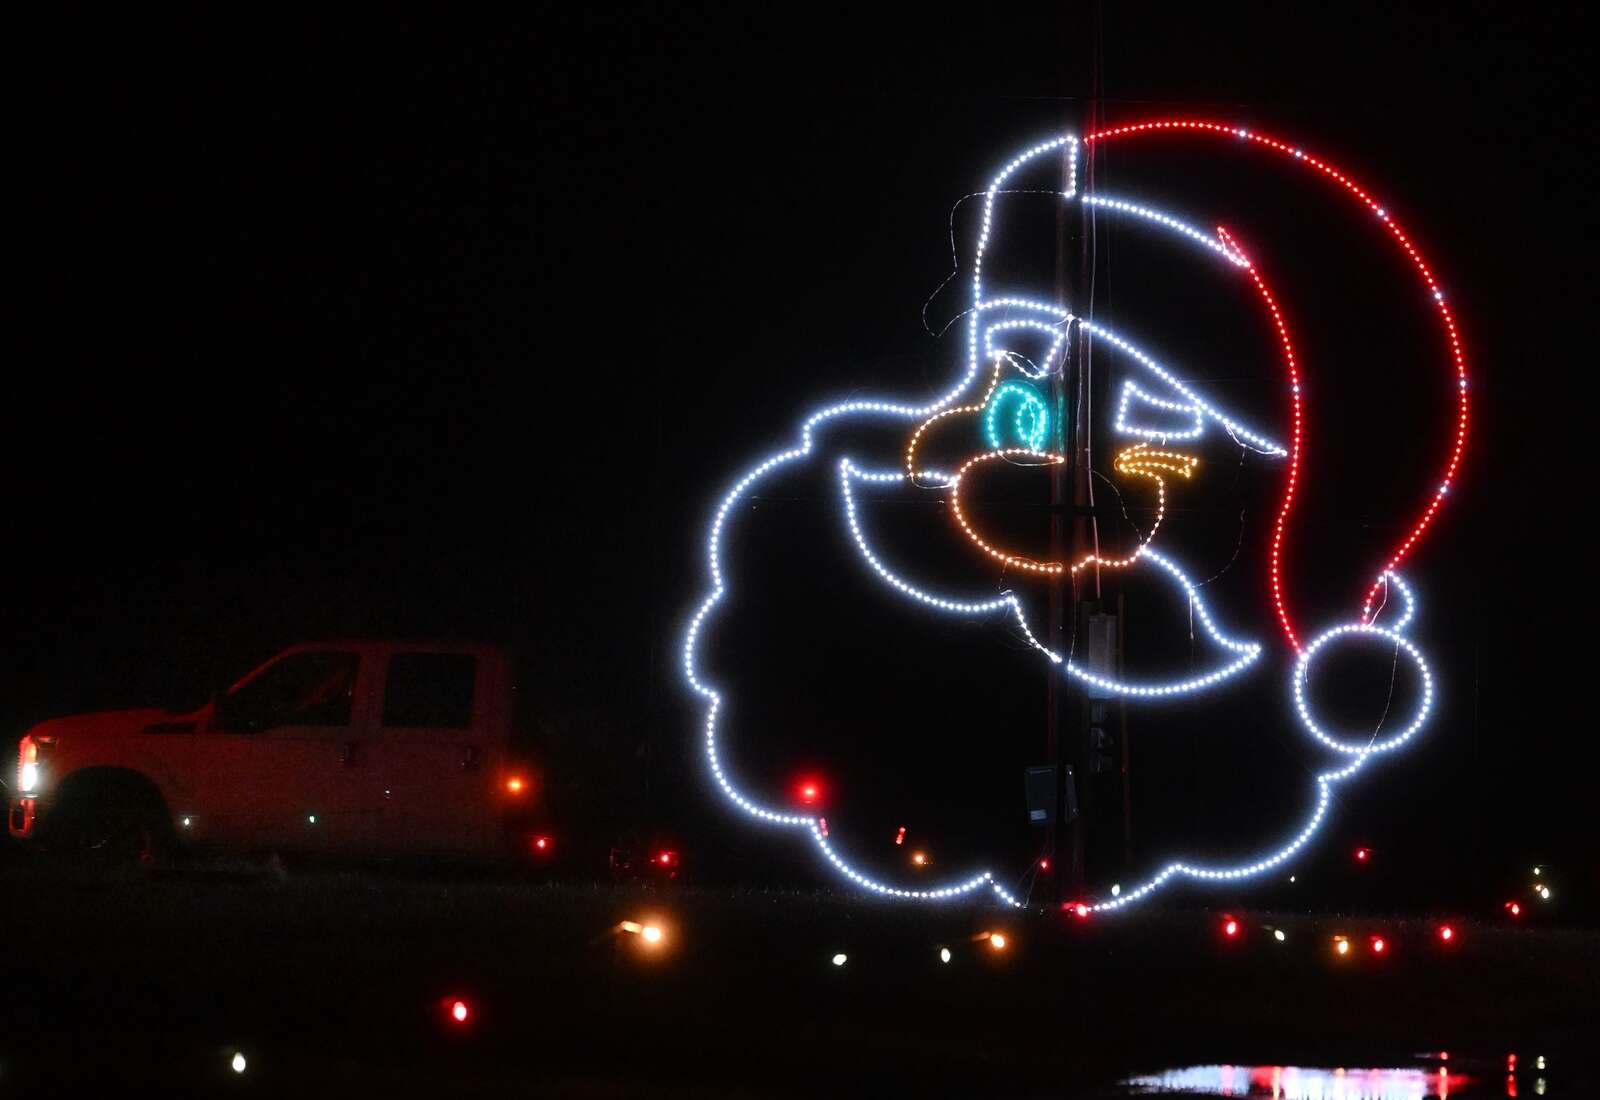 Santa’s face glows at the Big Butler Holiday Spectacular